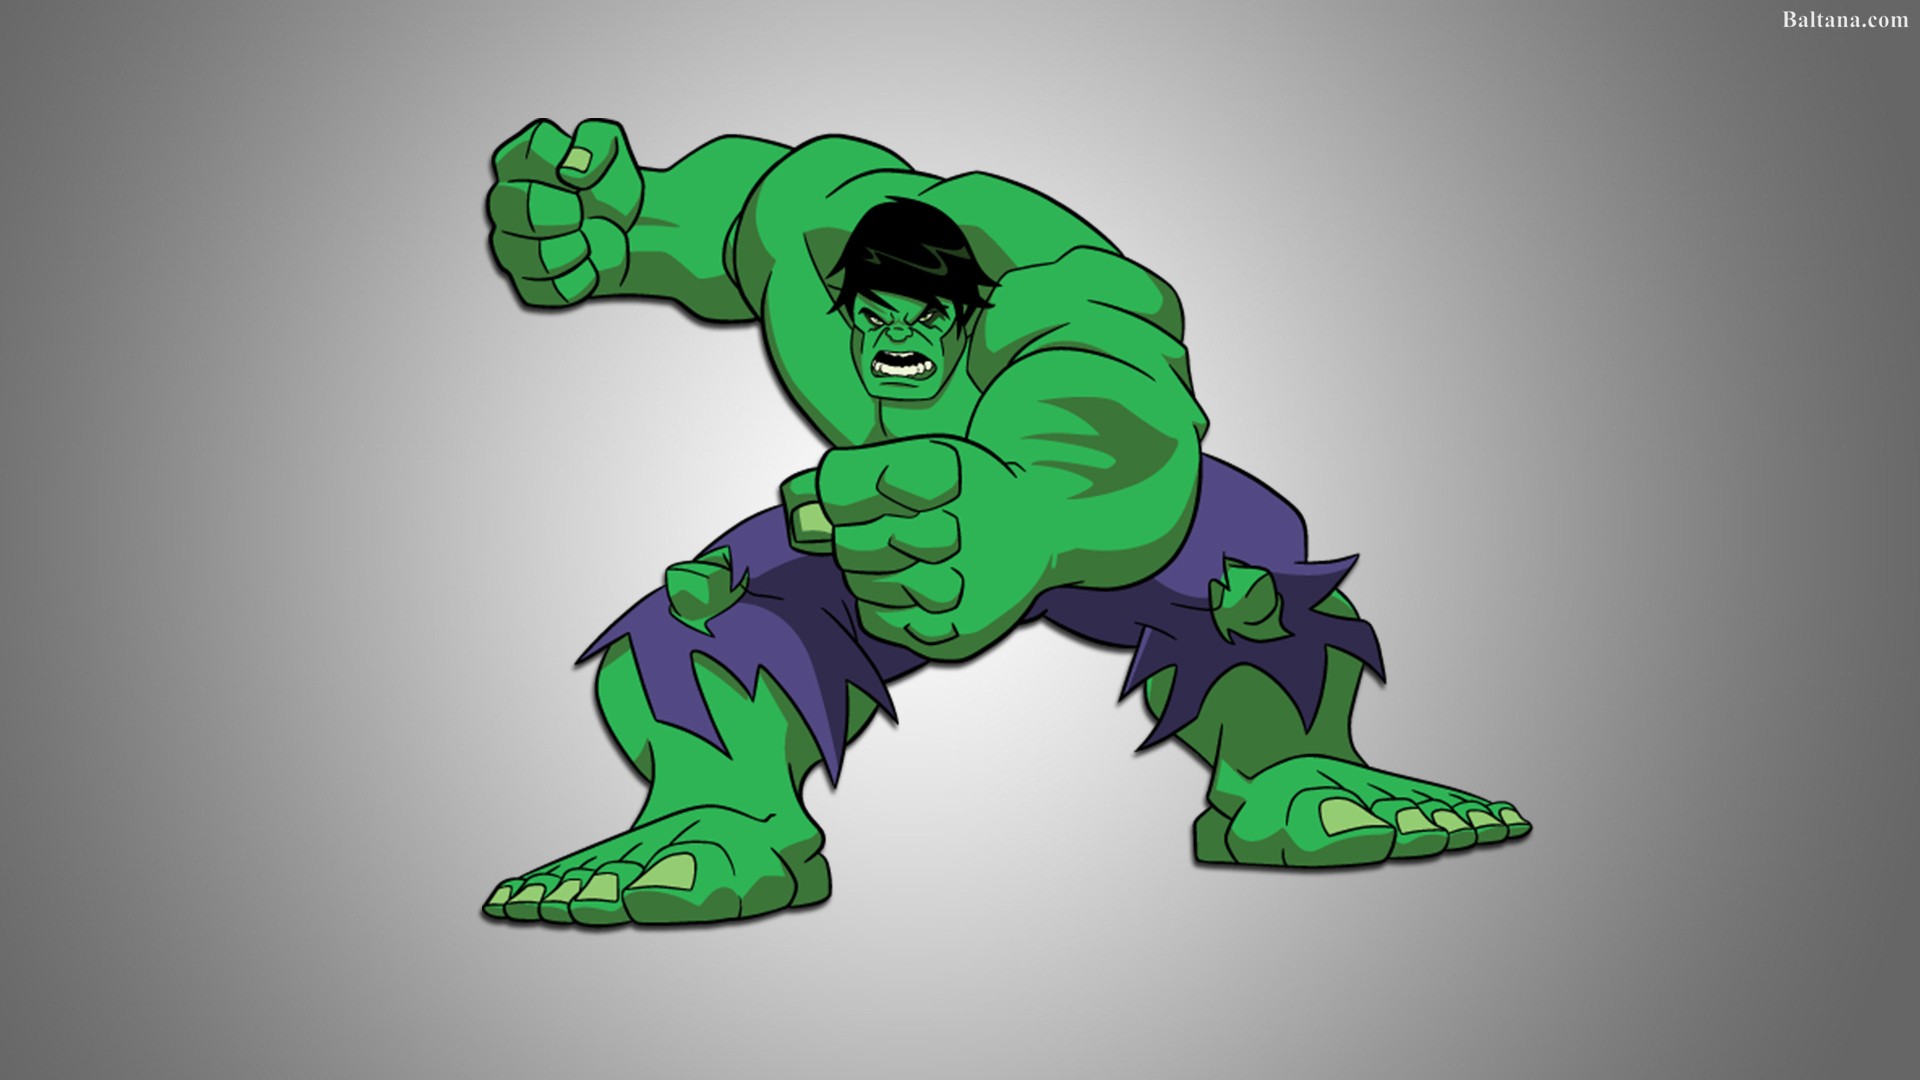 Animated Hulk Wallpaper Baltana